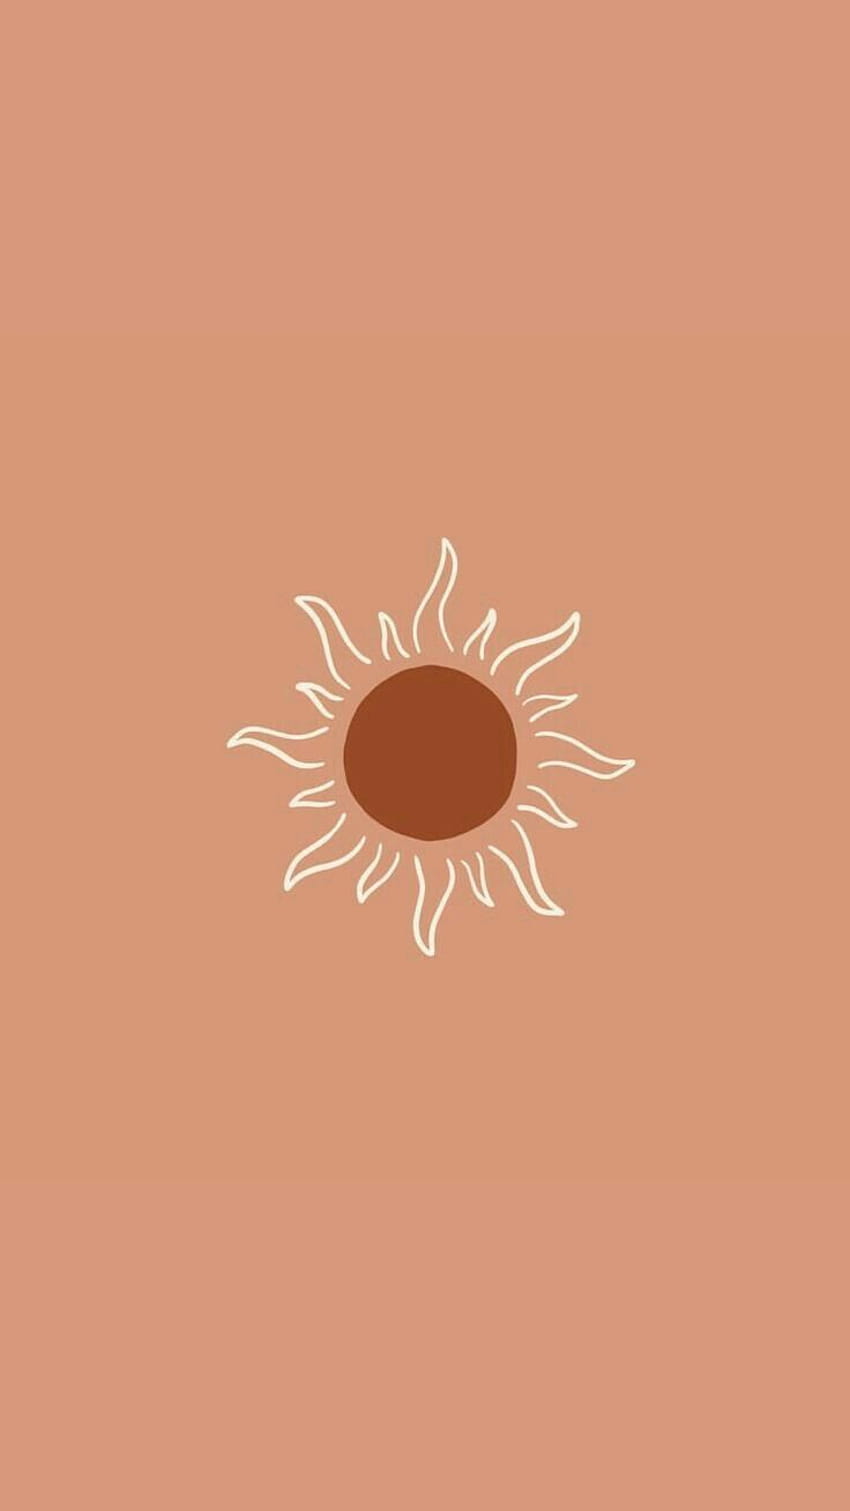 A sun symbol on an orange background - Minimalist, neutral, pastel minimalist